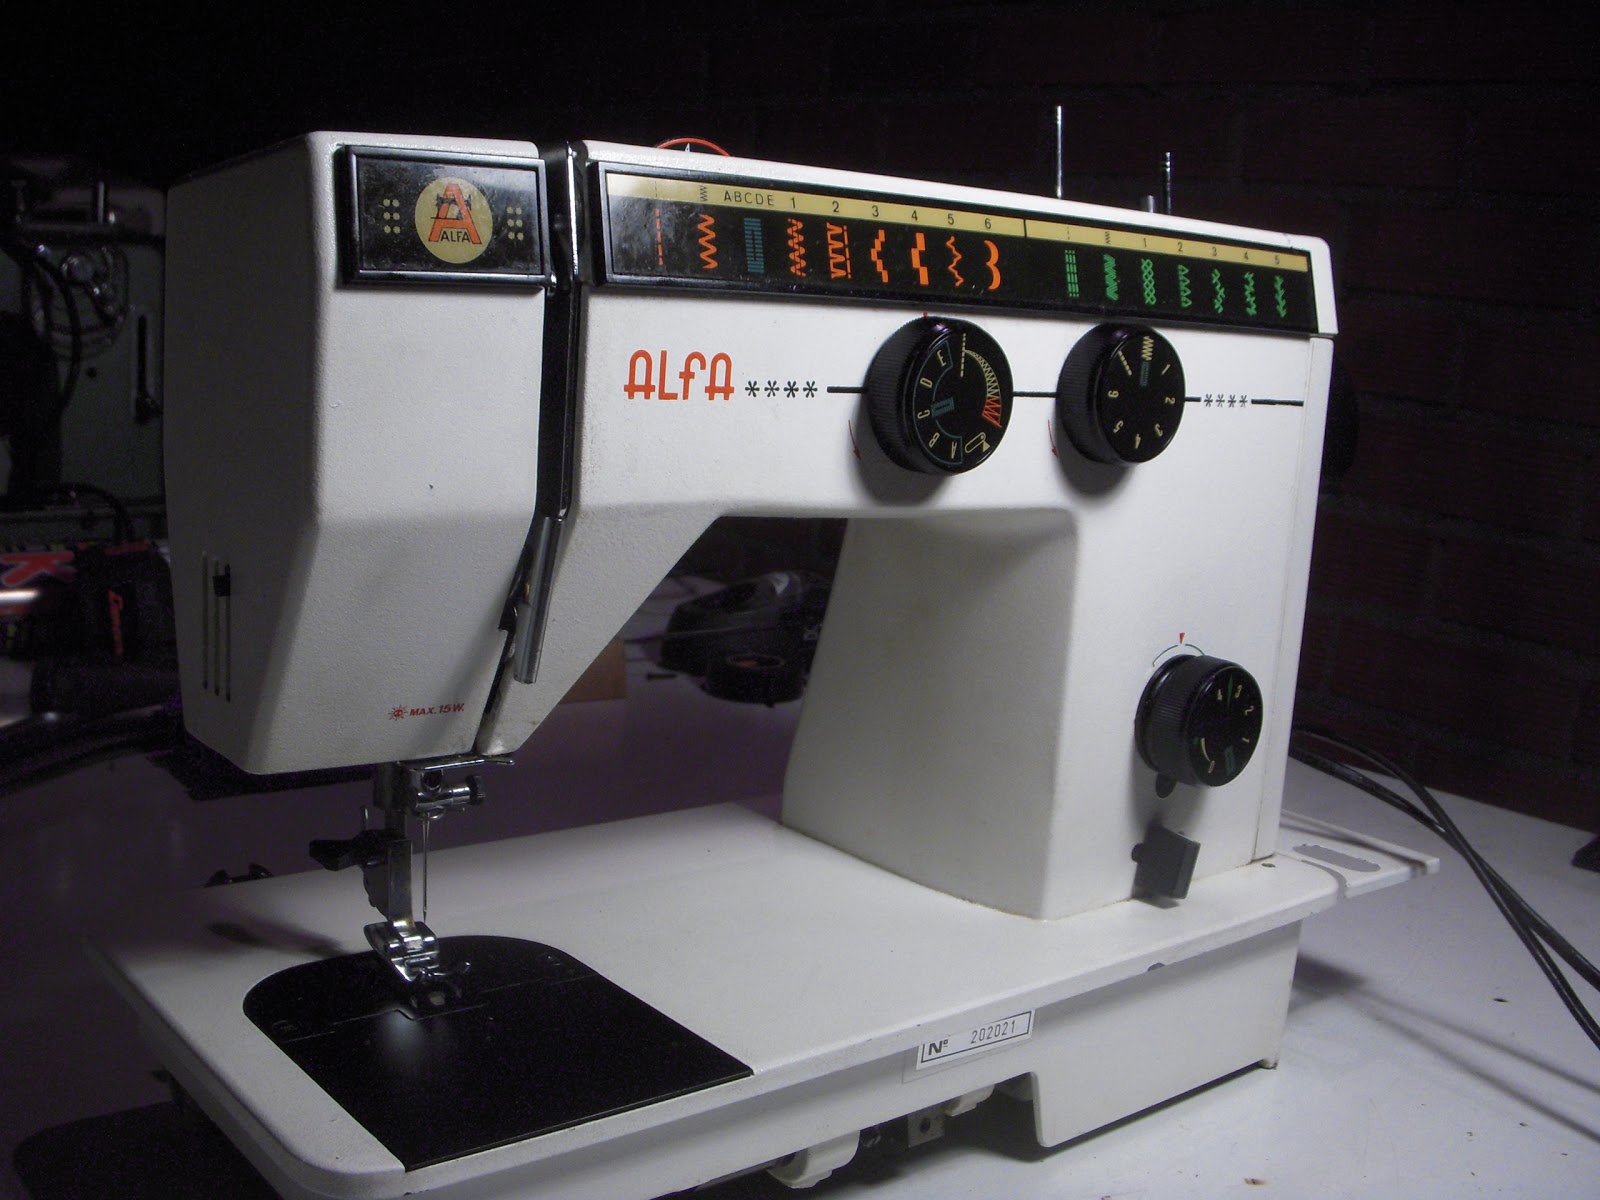 Máquinas de coser Alfa